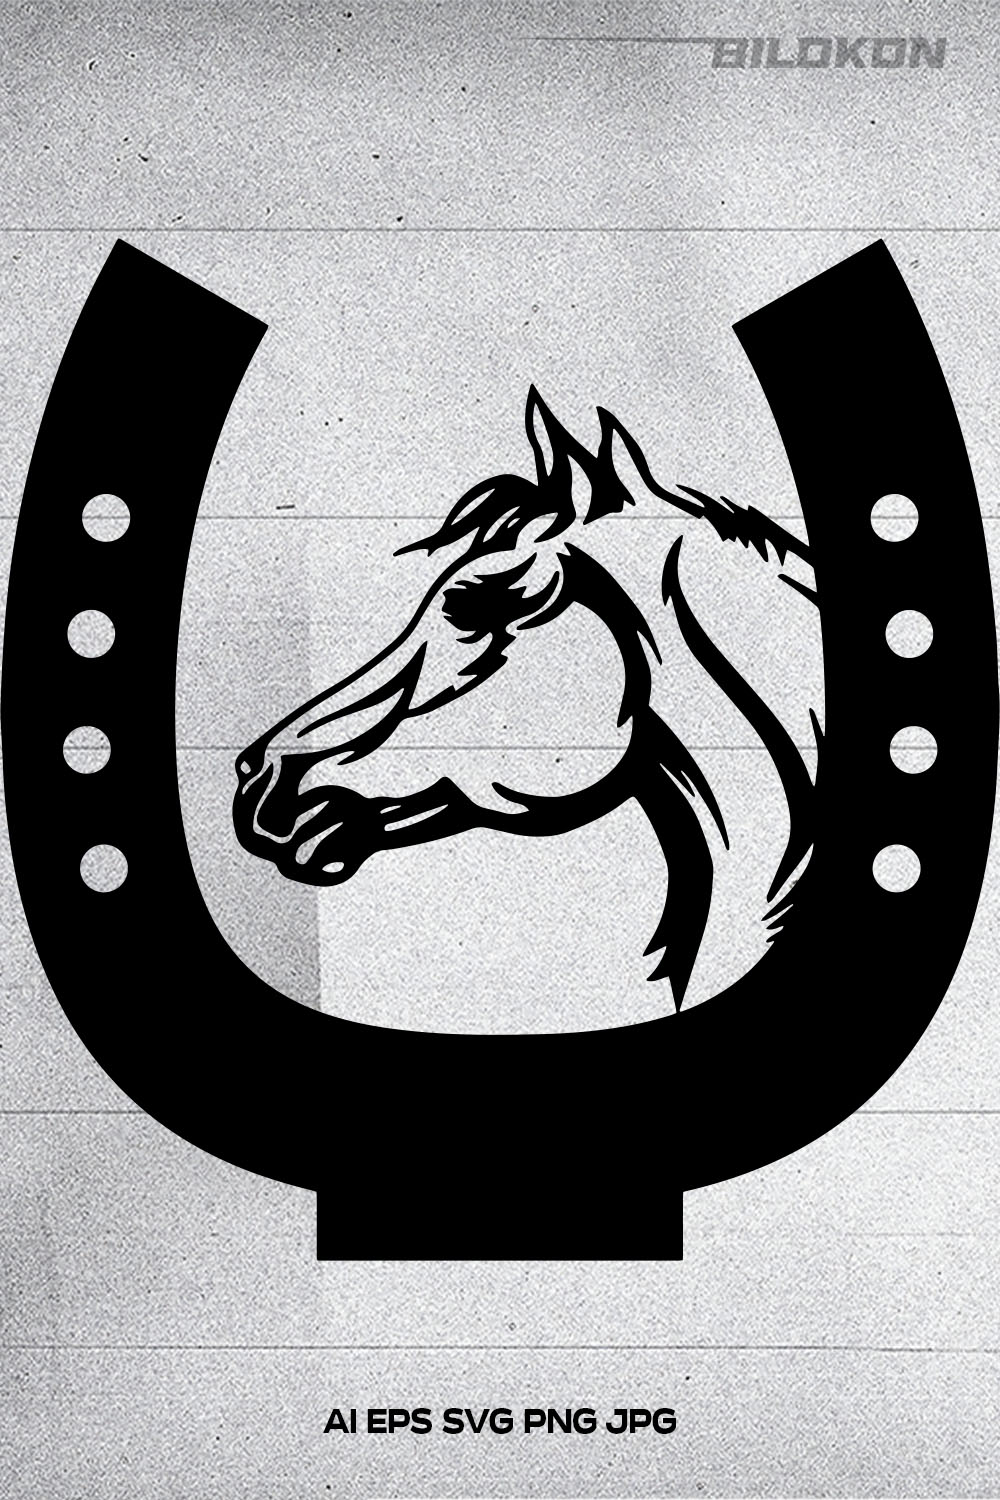 Black and white horse head on a horseshoe.